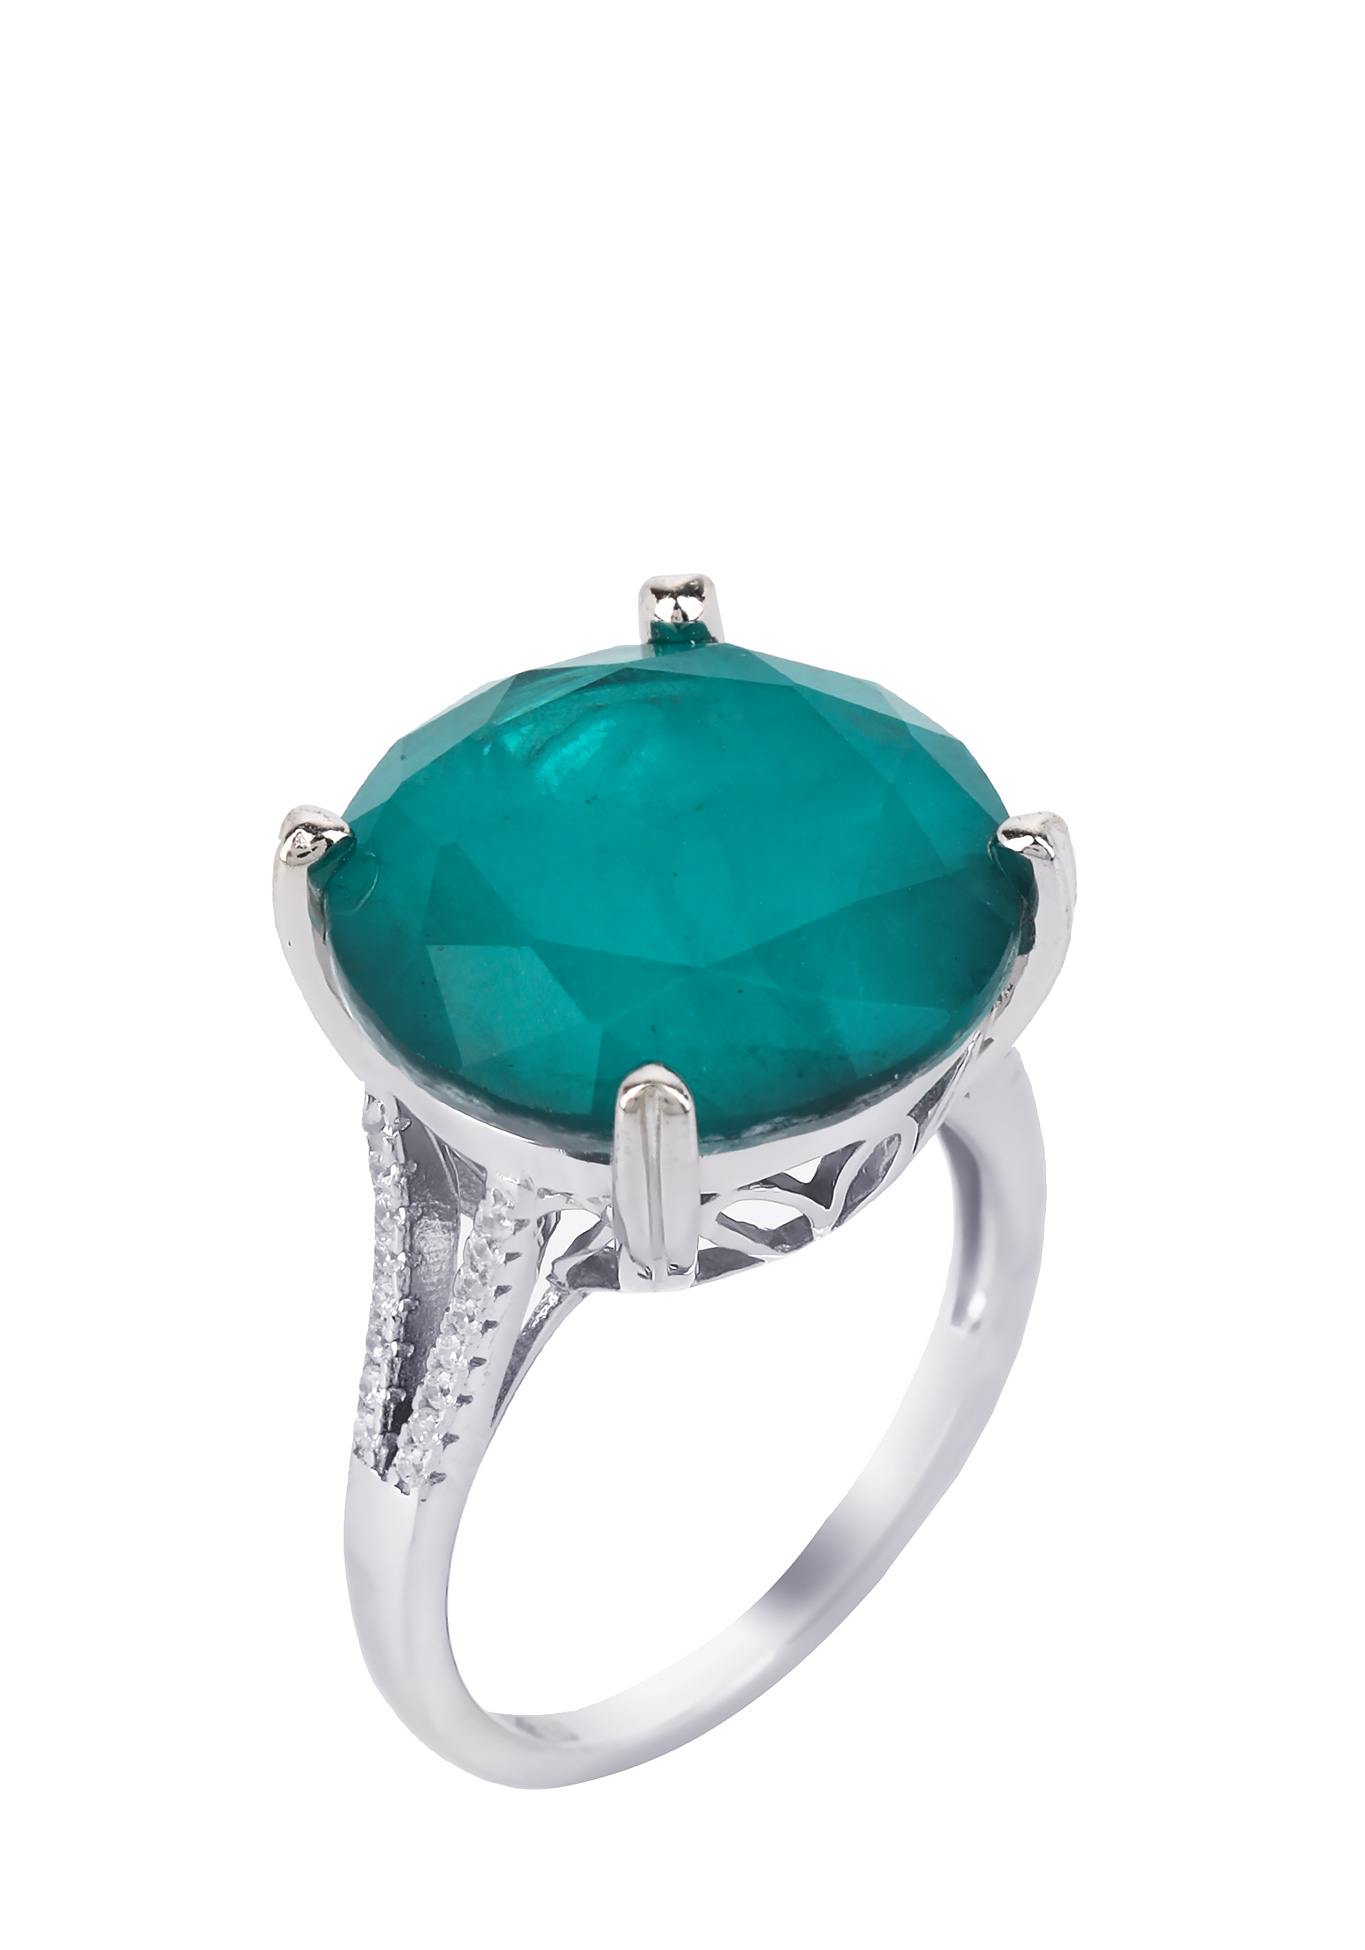 Кольцо серебряное "Леди" Fresh Jewelry, размер 19, цвет сиреневый солитер, сплит шенк - фото 3